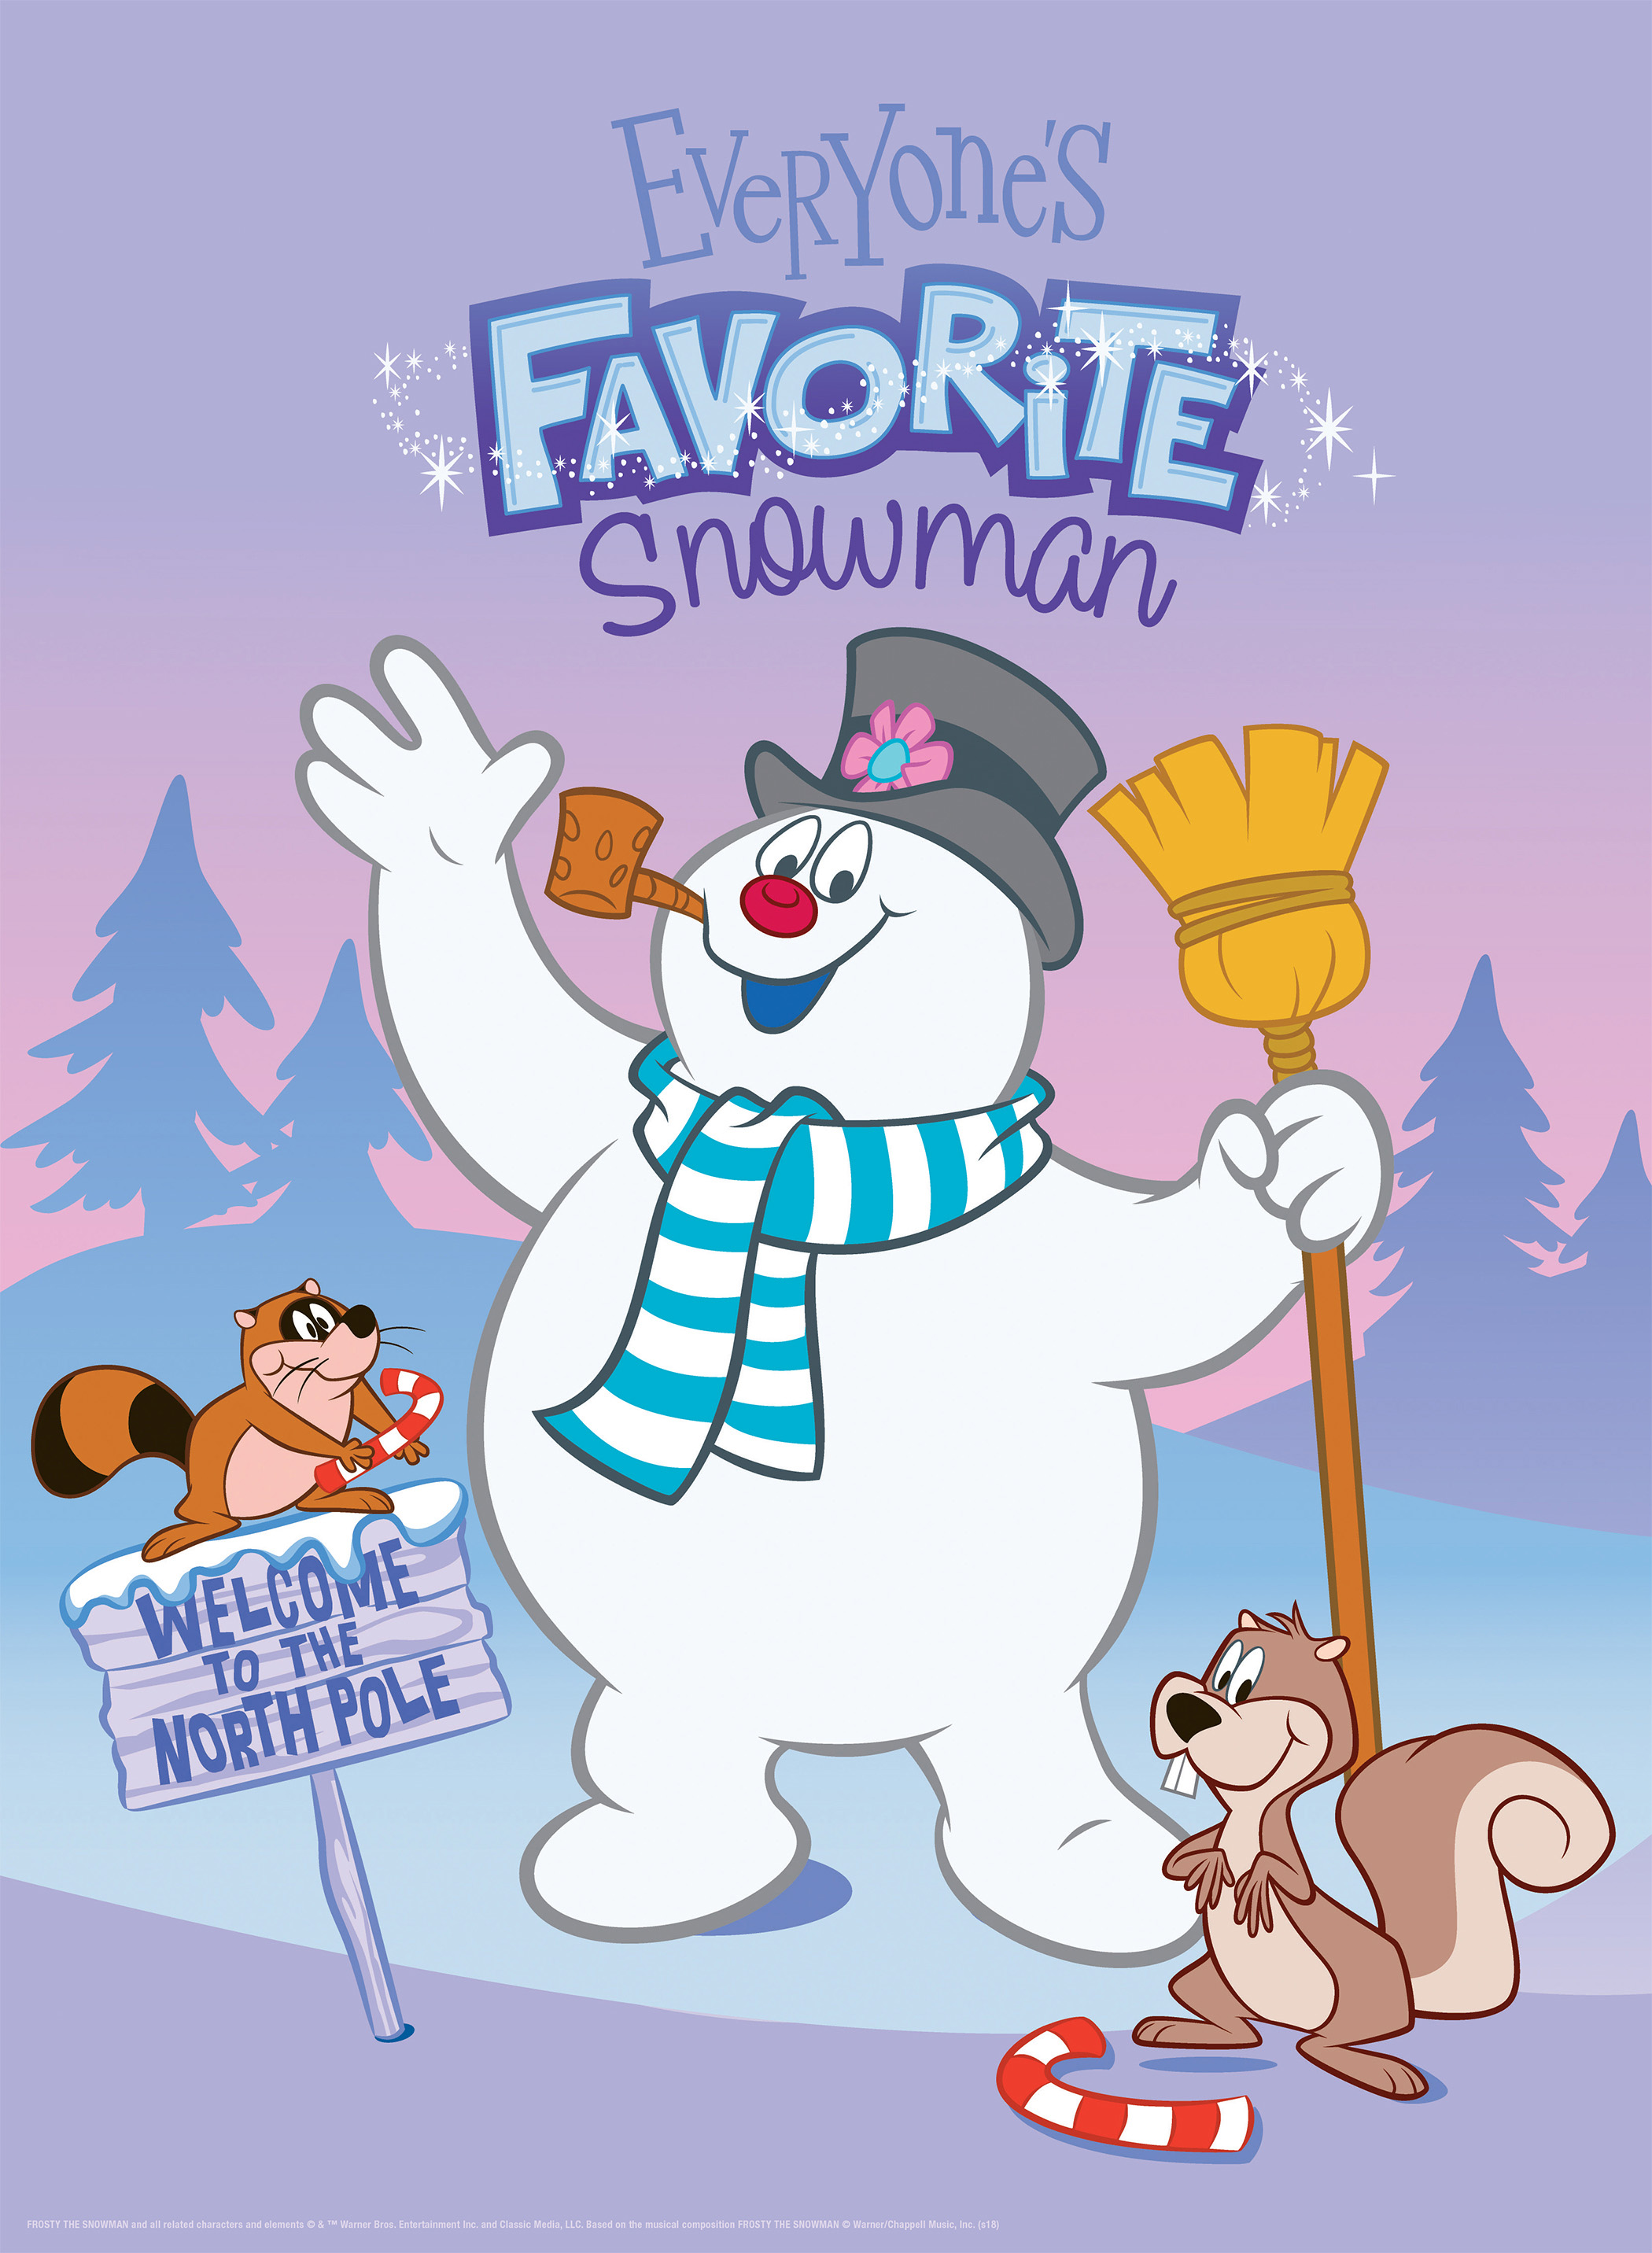 Everyone’s Favorite Snowman, Frosty the Snowman